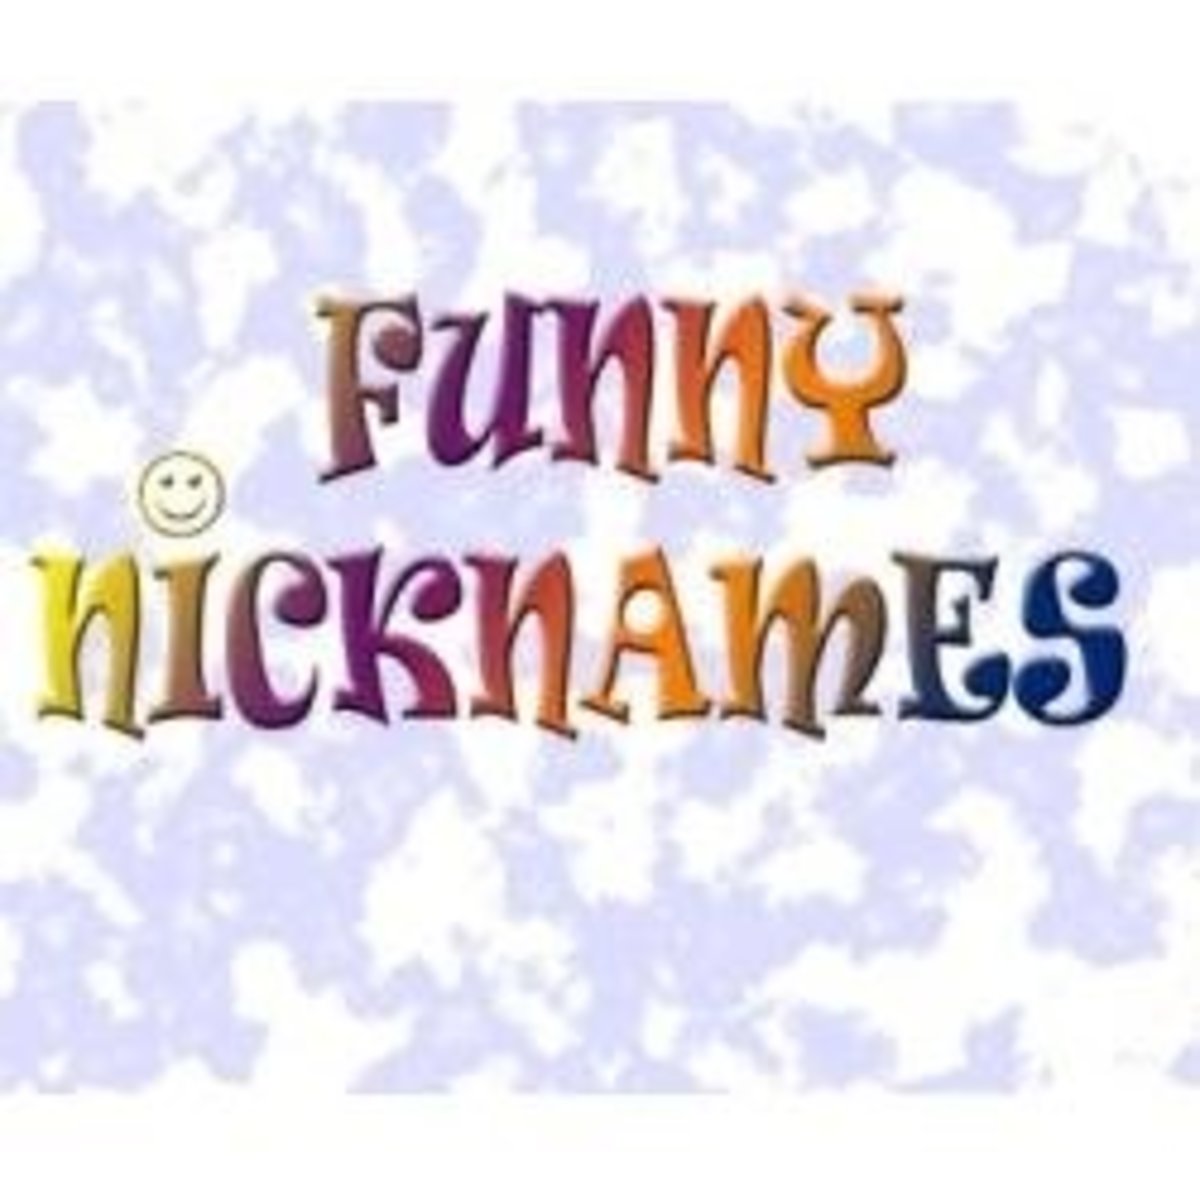 List of Funny Nicknames